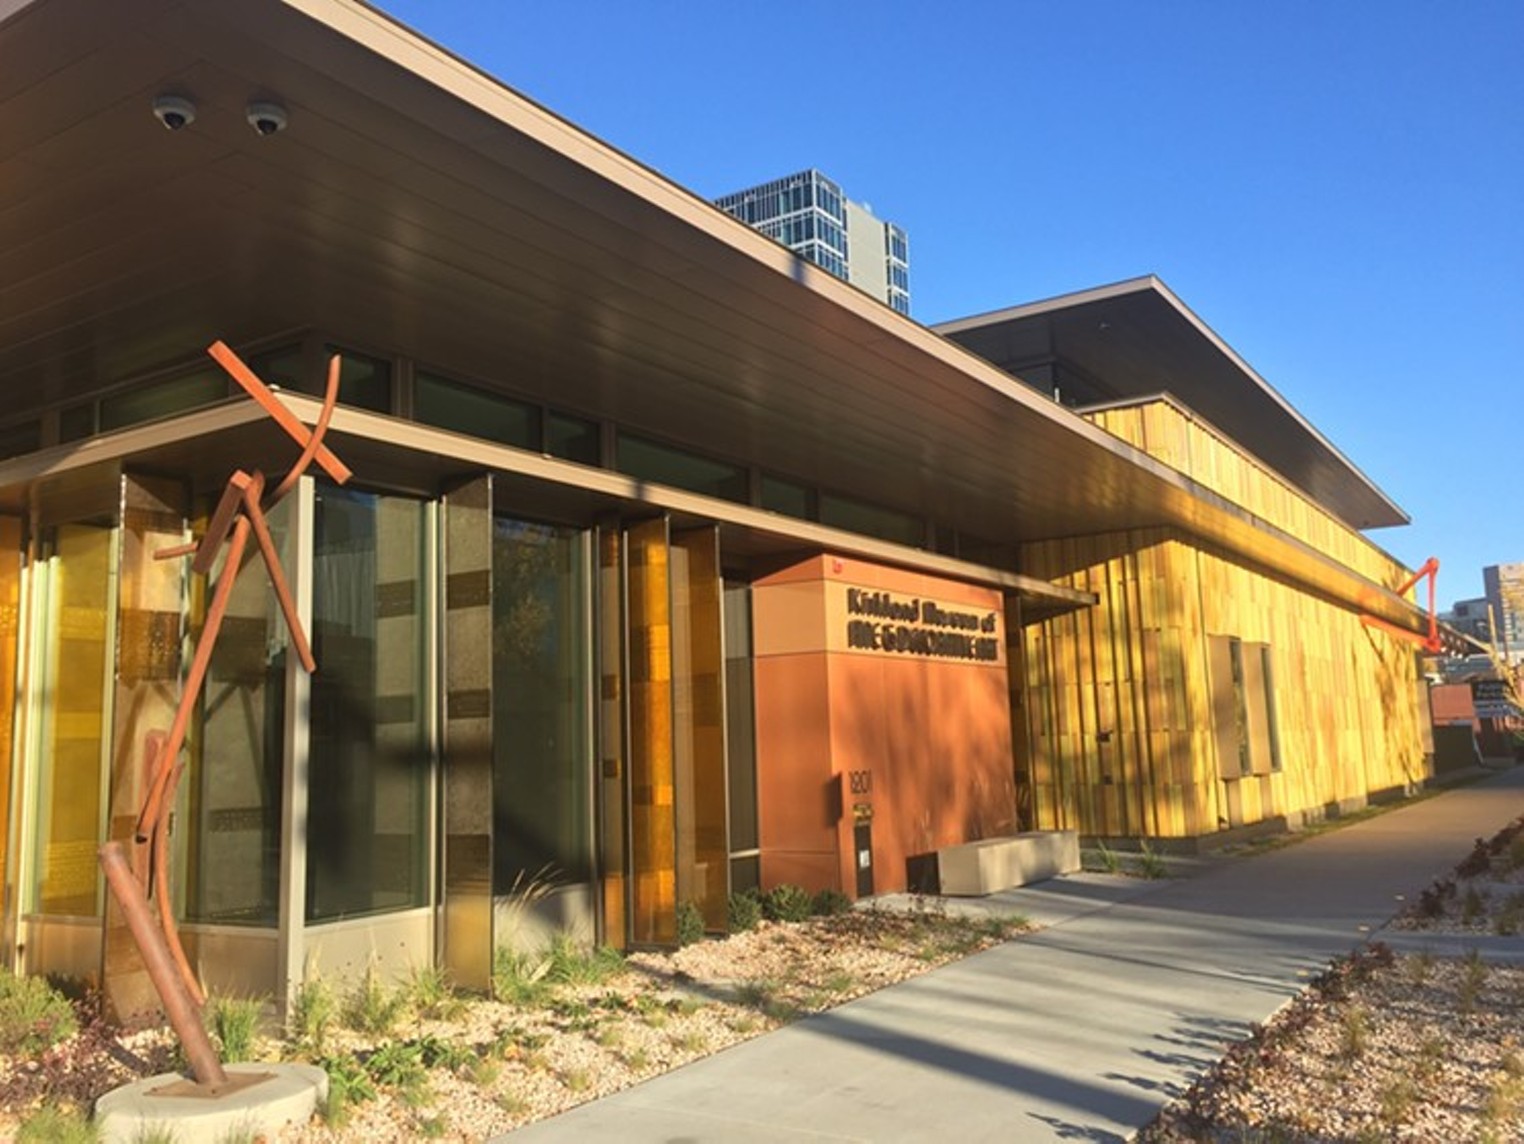 Denver Art Museum Merges With Kirkland Museum in New Partnership